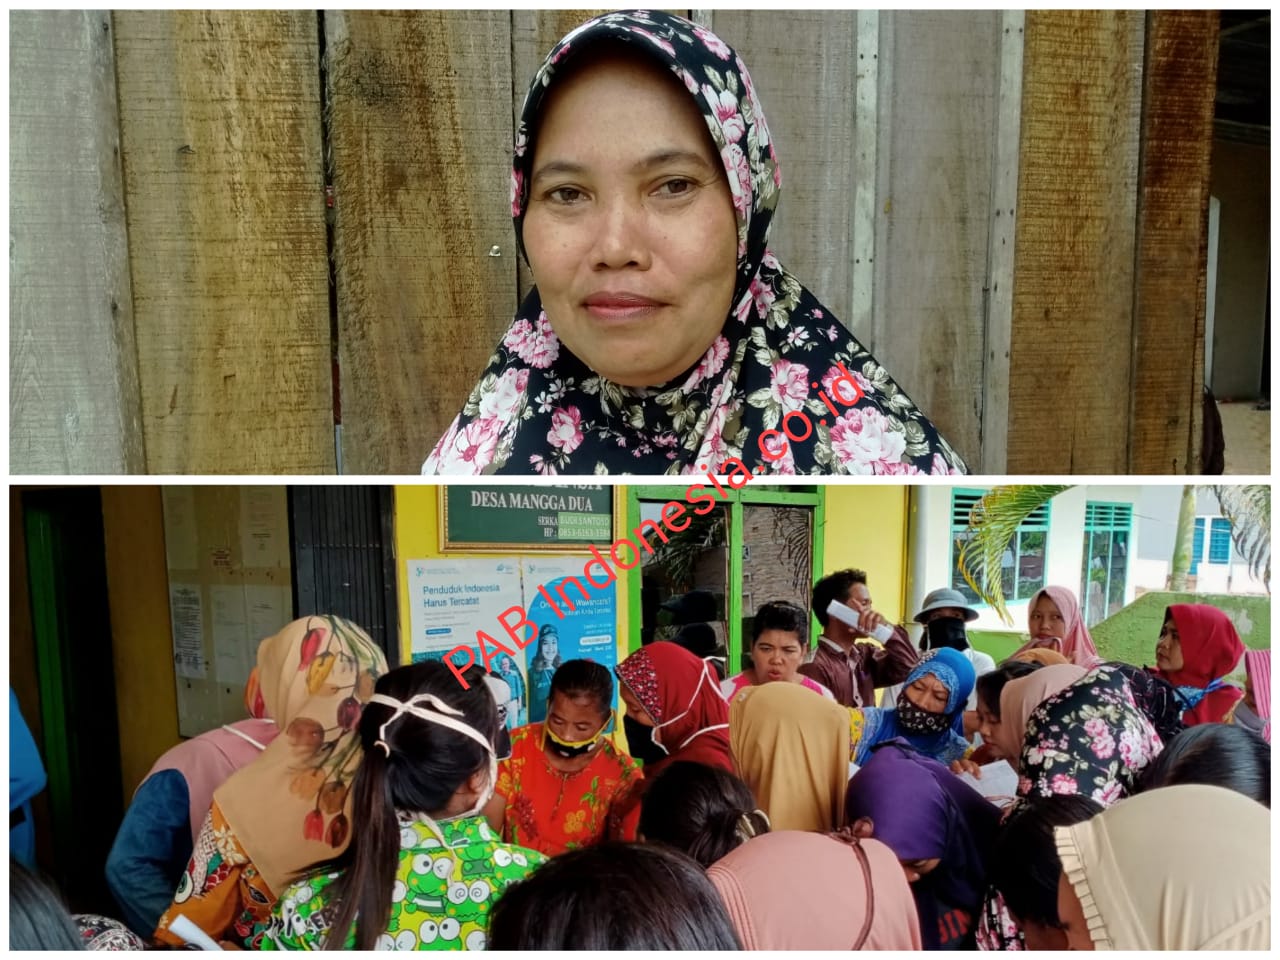 Puluhan Emak-emak Gruduk Kantor Desa Mangga Dua Tuntut BST, BLT dan Sembako Merata